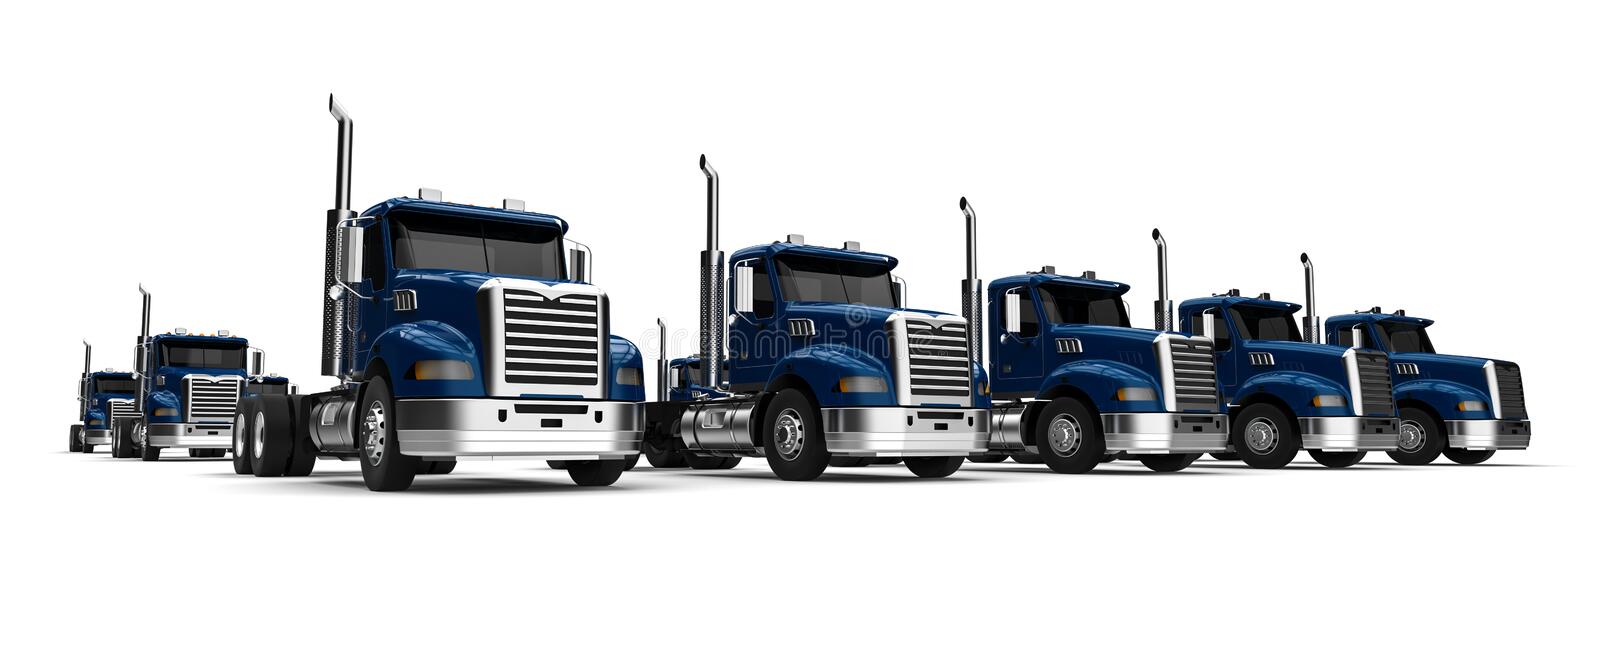 trucks-fleet-d-render-image-representing-85081574